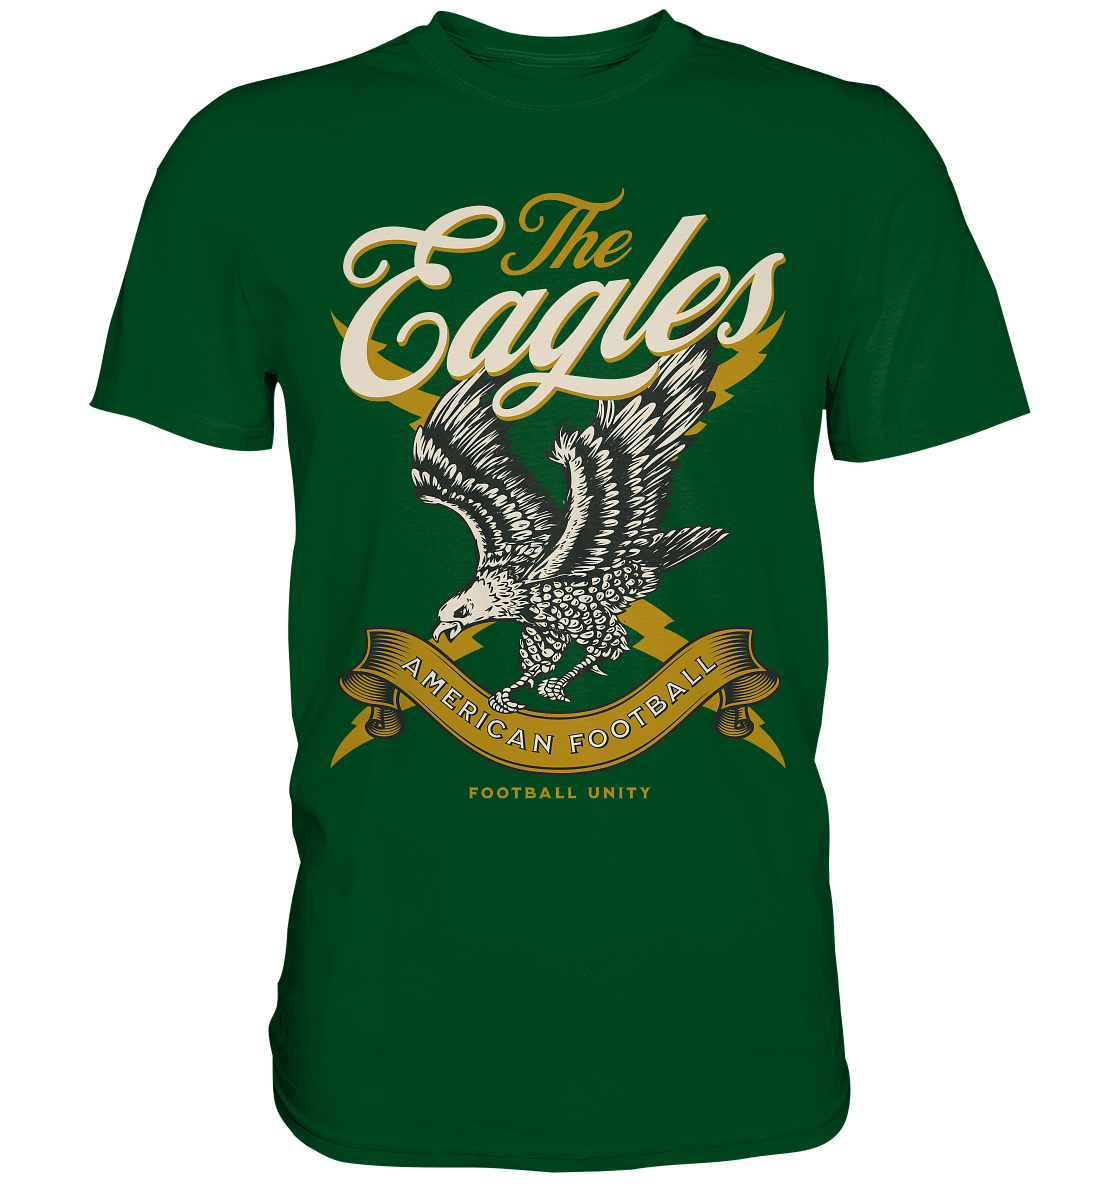 The Eagles - Football Unity - Premium Shirt - Football Unity Football Unity